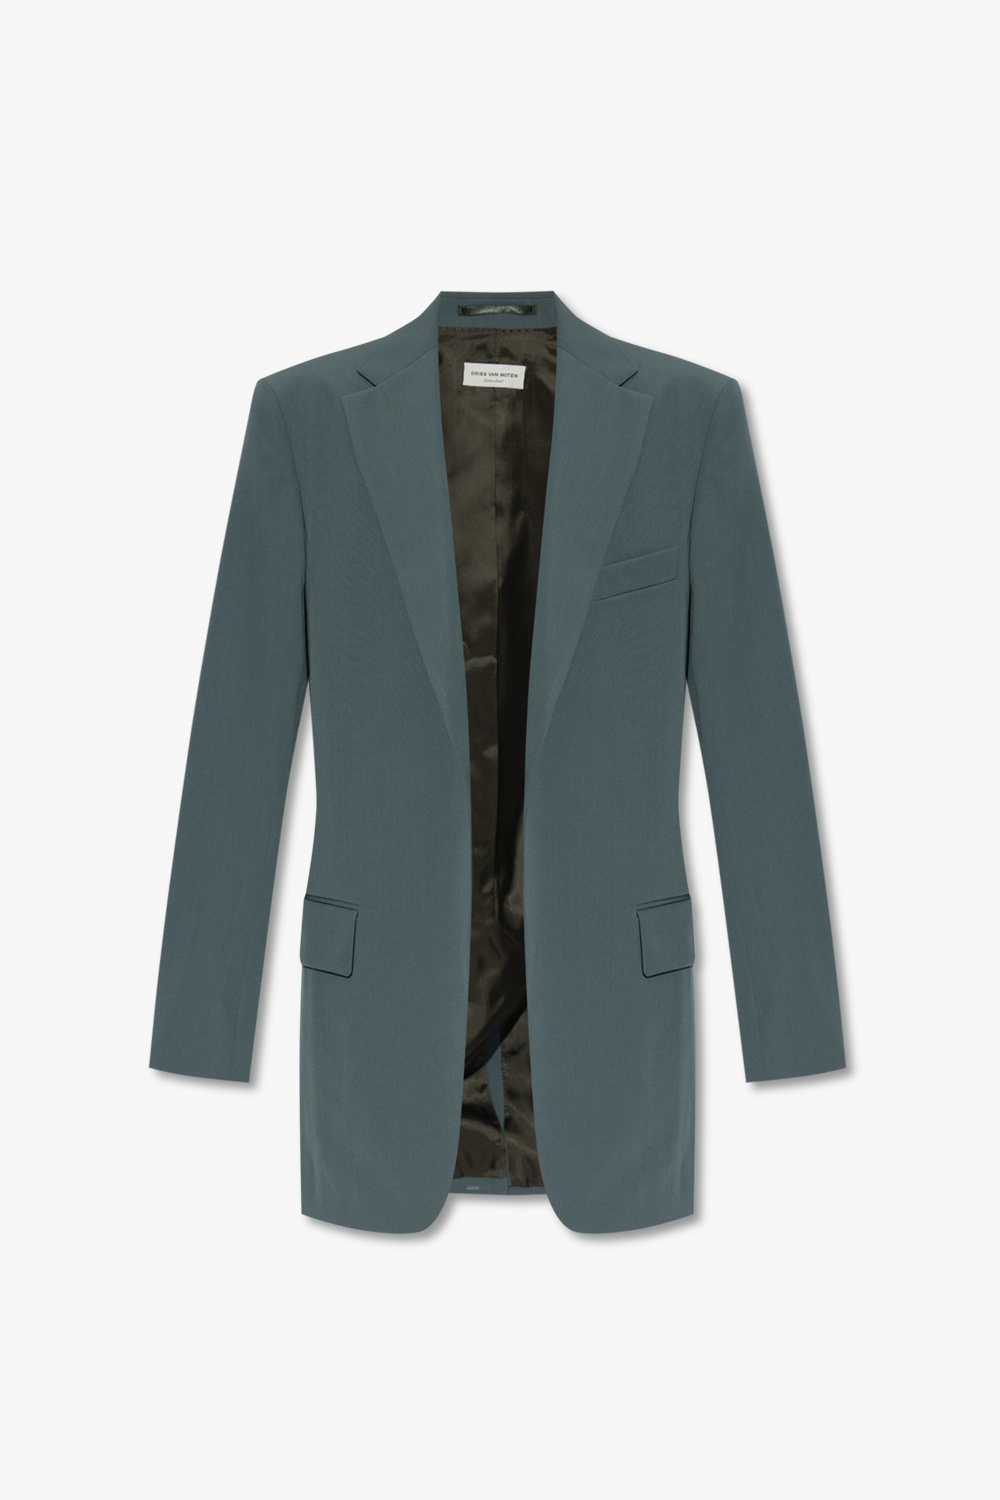 Dries Van Noten Relaxed-fitting blazer